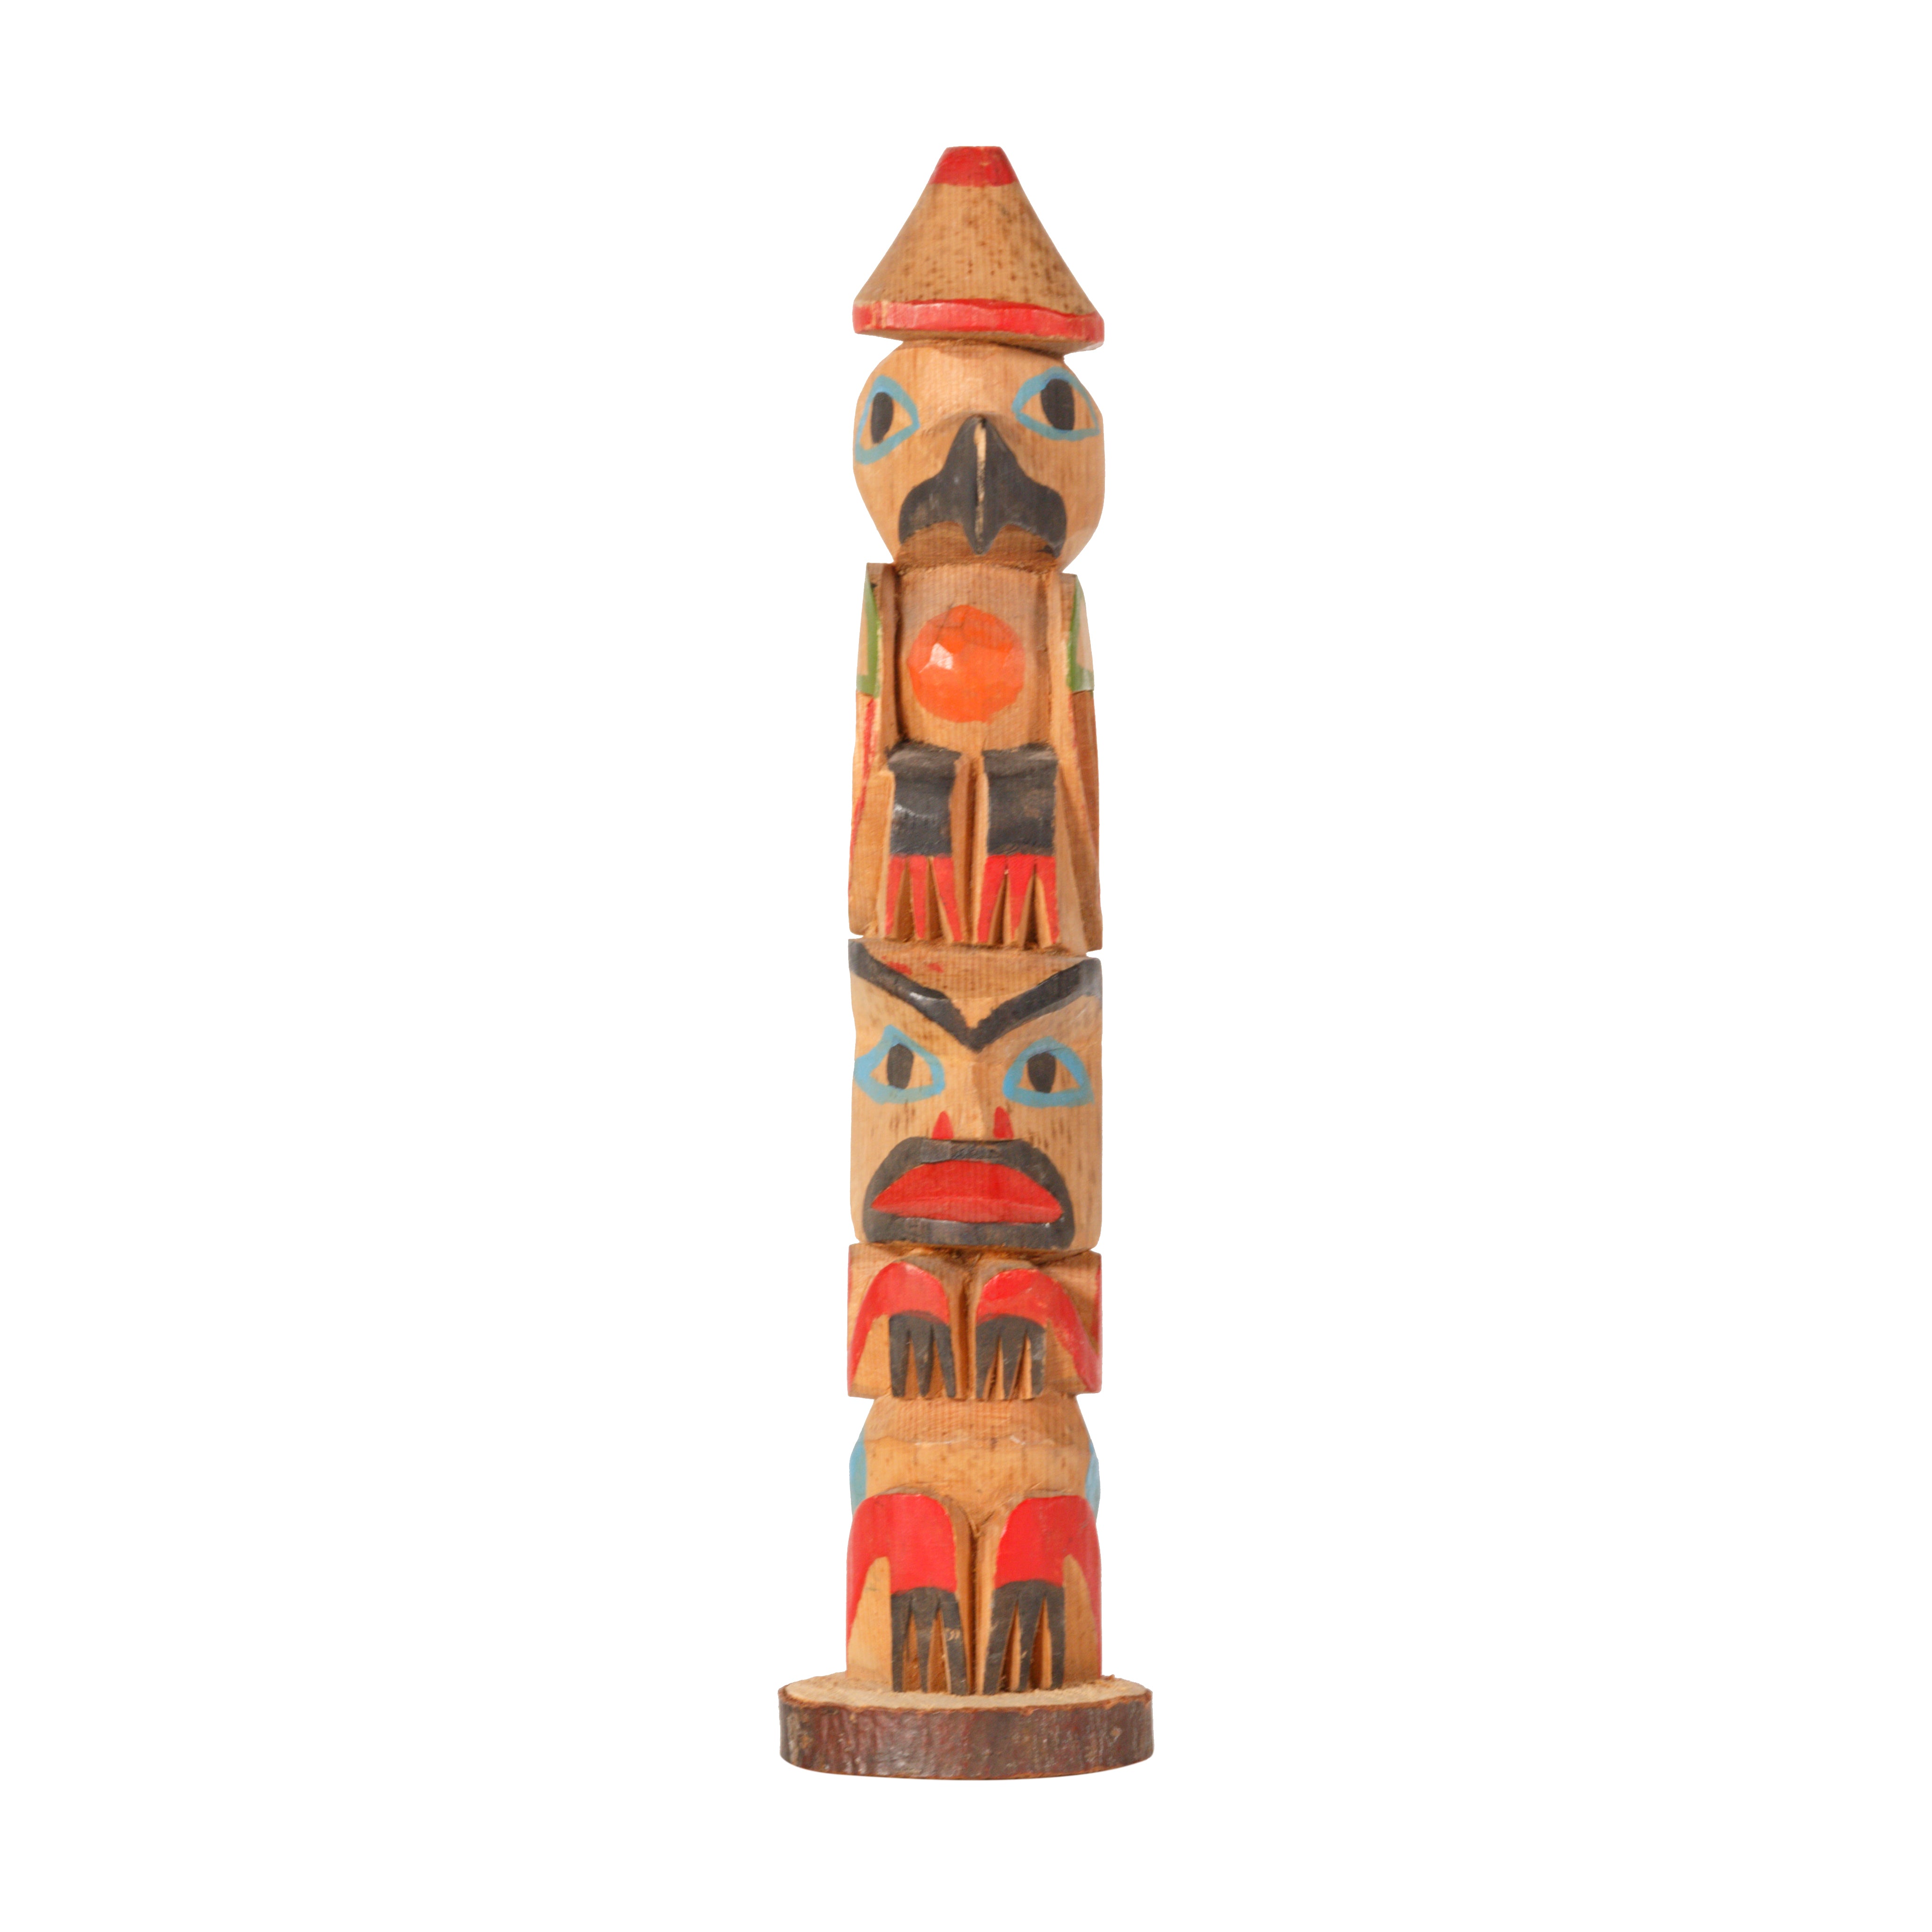 Two-figure Ditidaht/Nuu-chah-nulth Totem